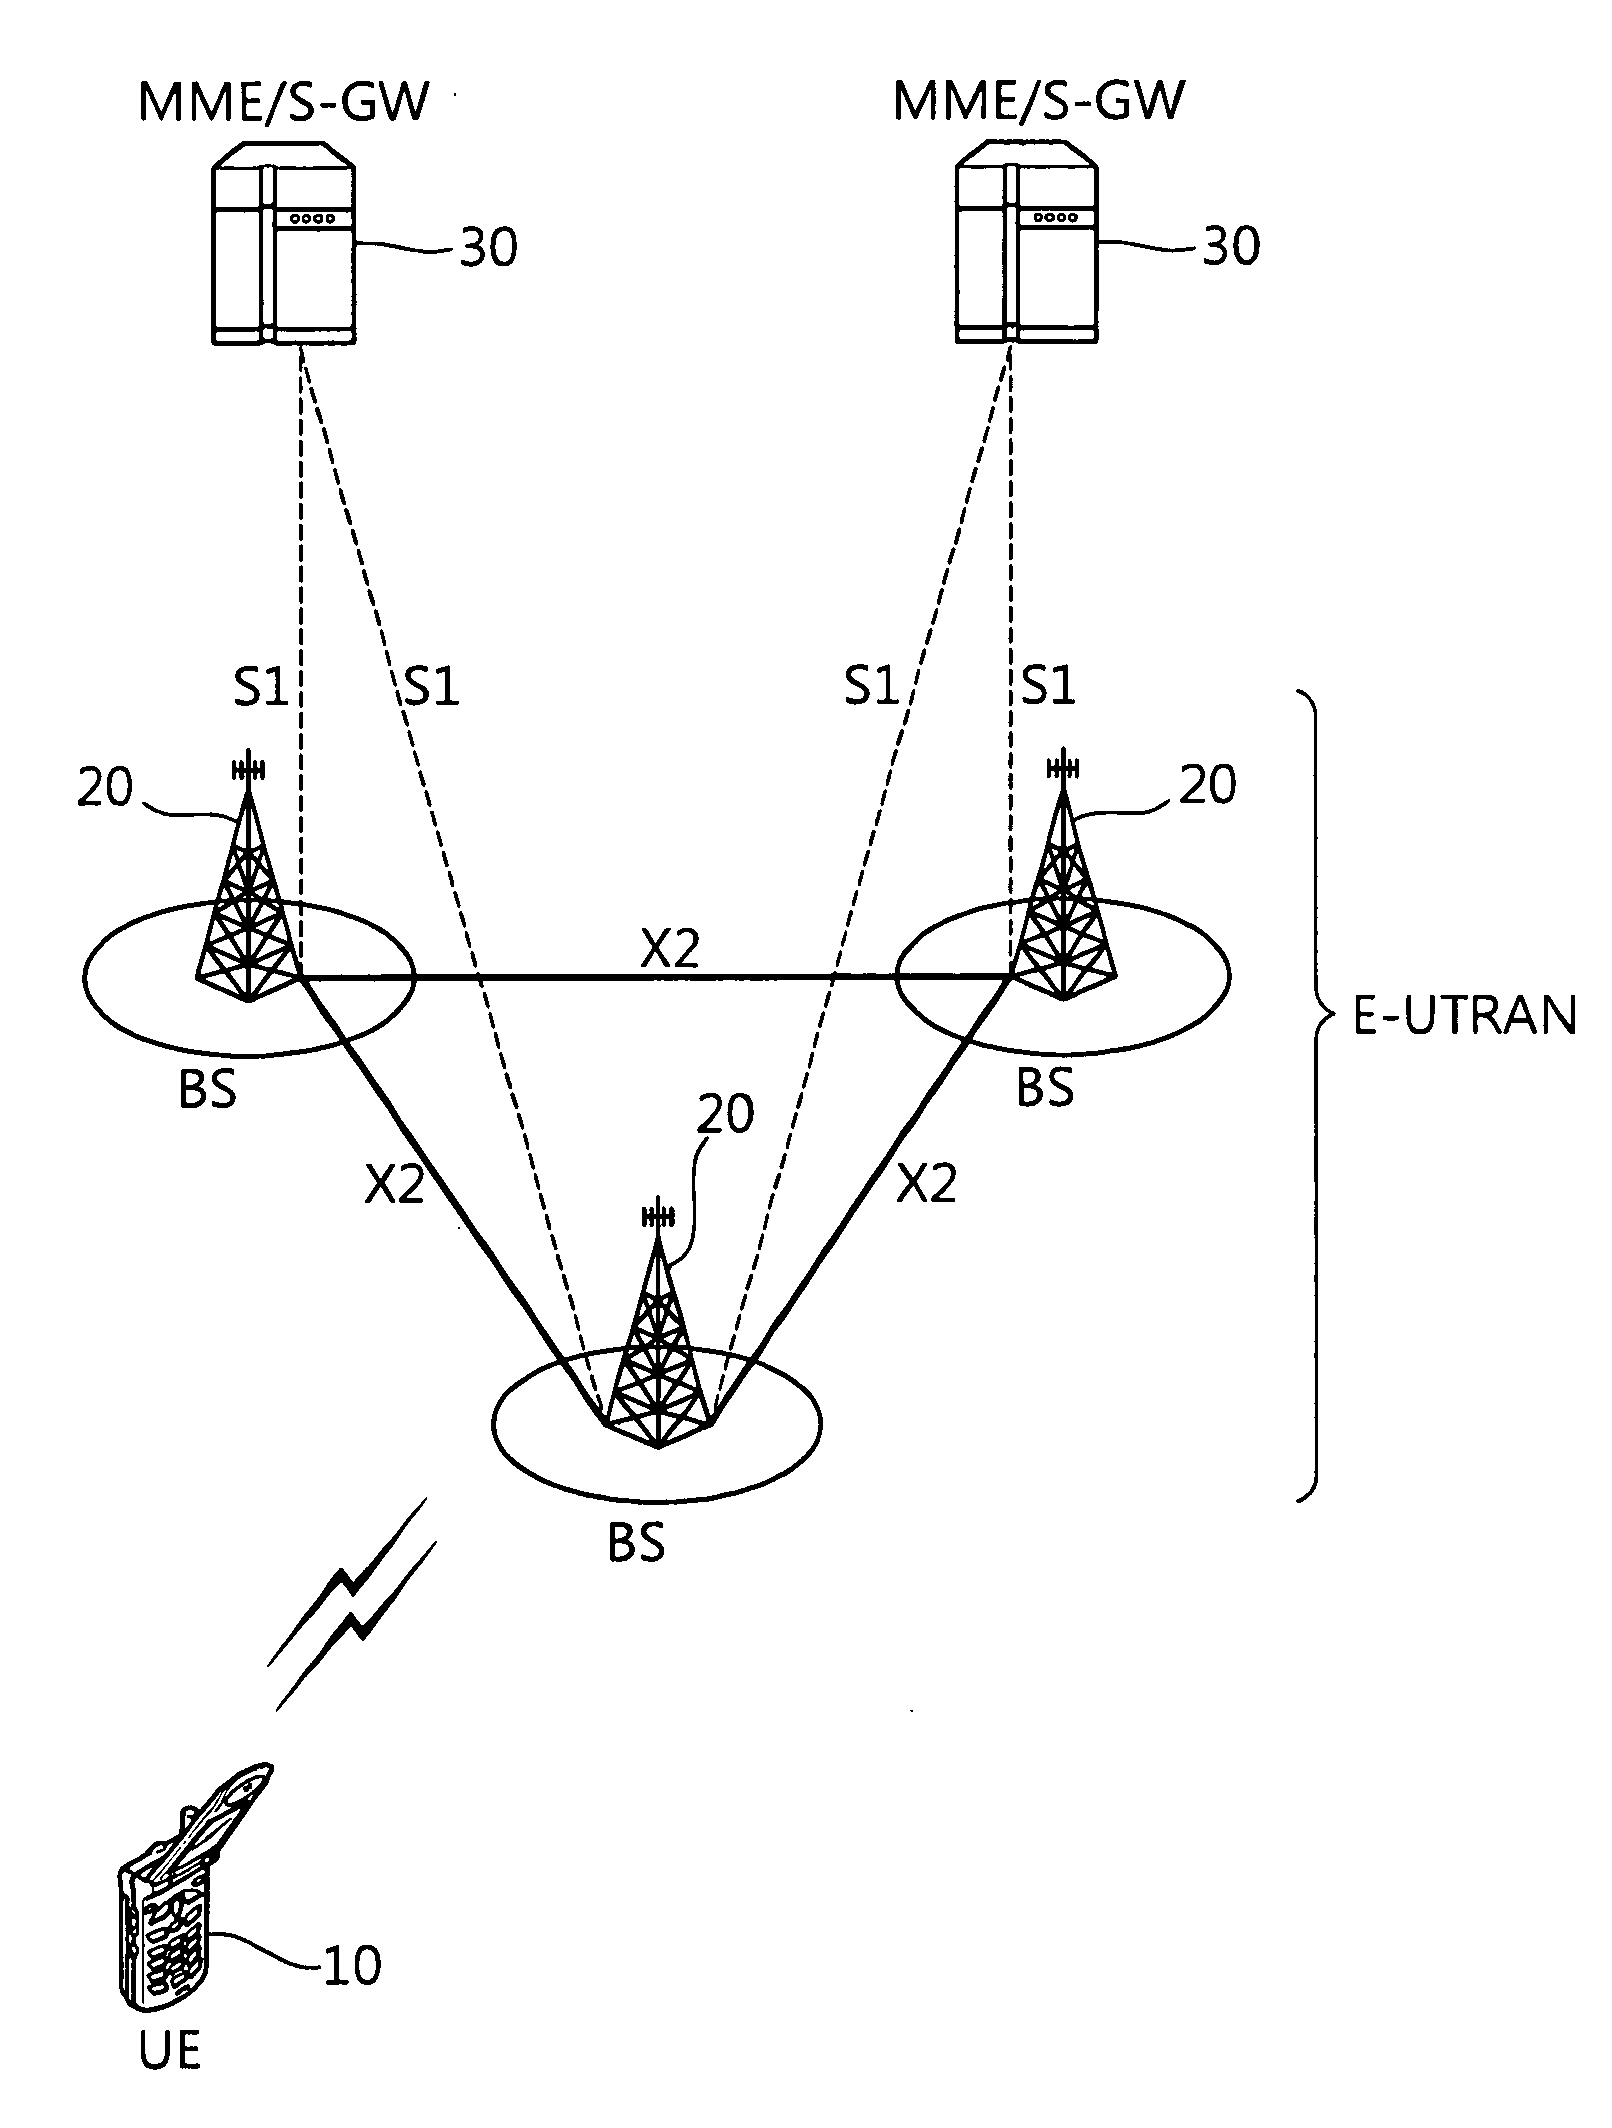 Method of controlling transmit power of uplink channel